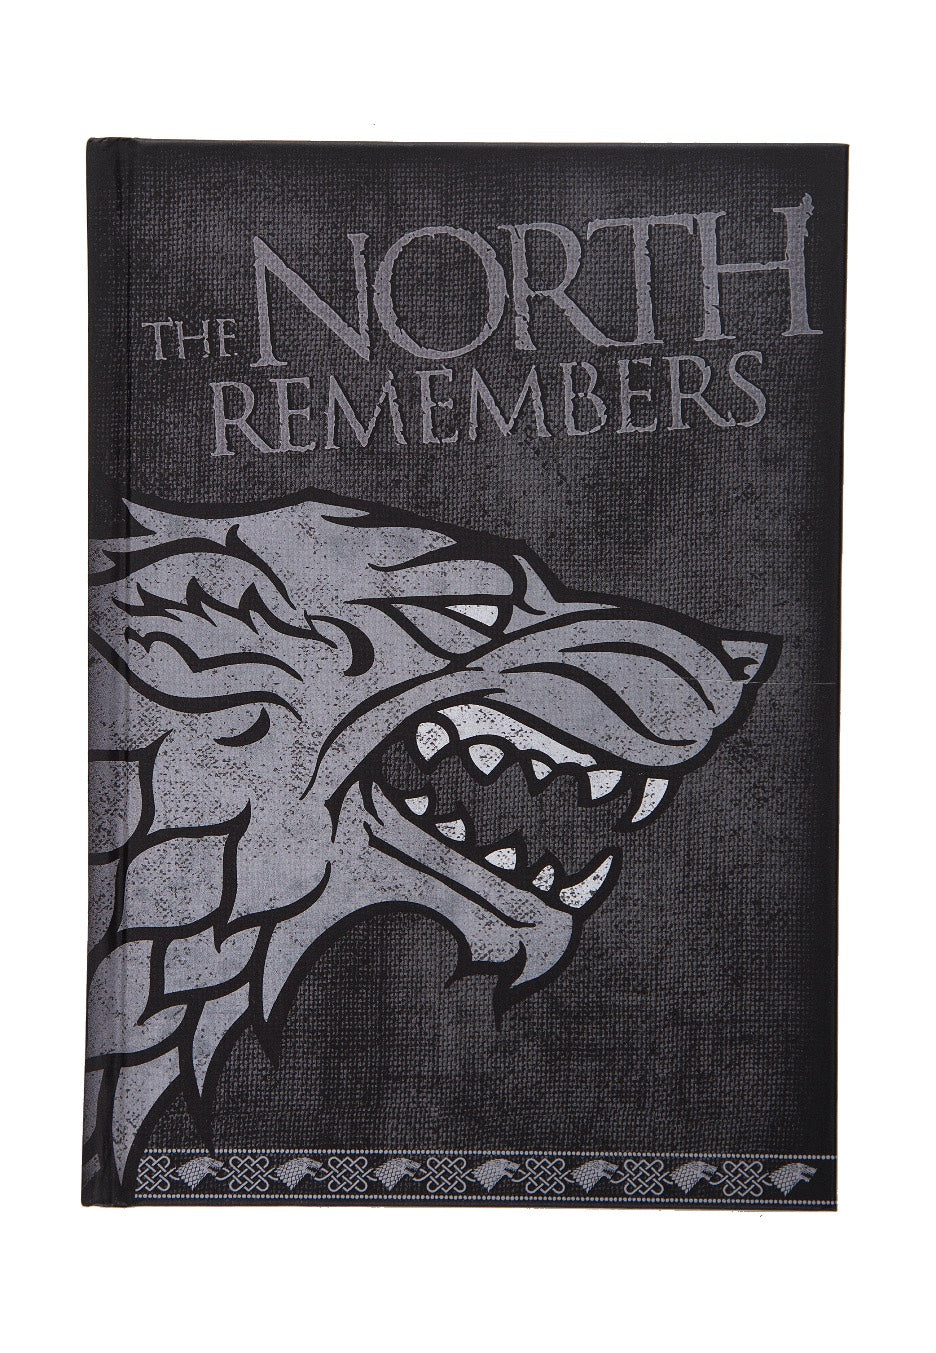 Game of Thrones - Stark - Notebook